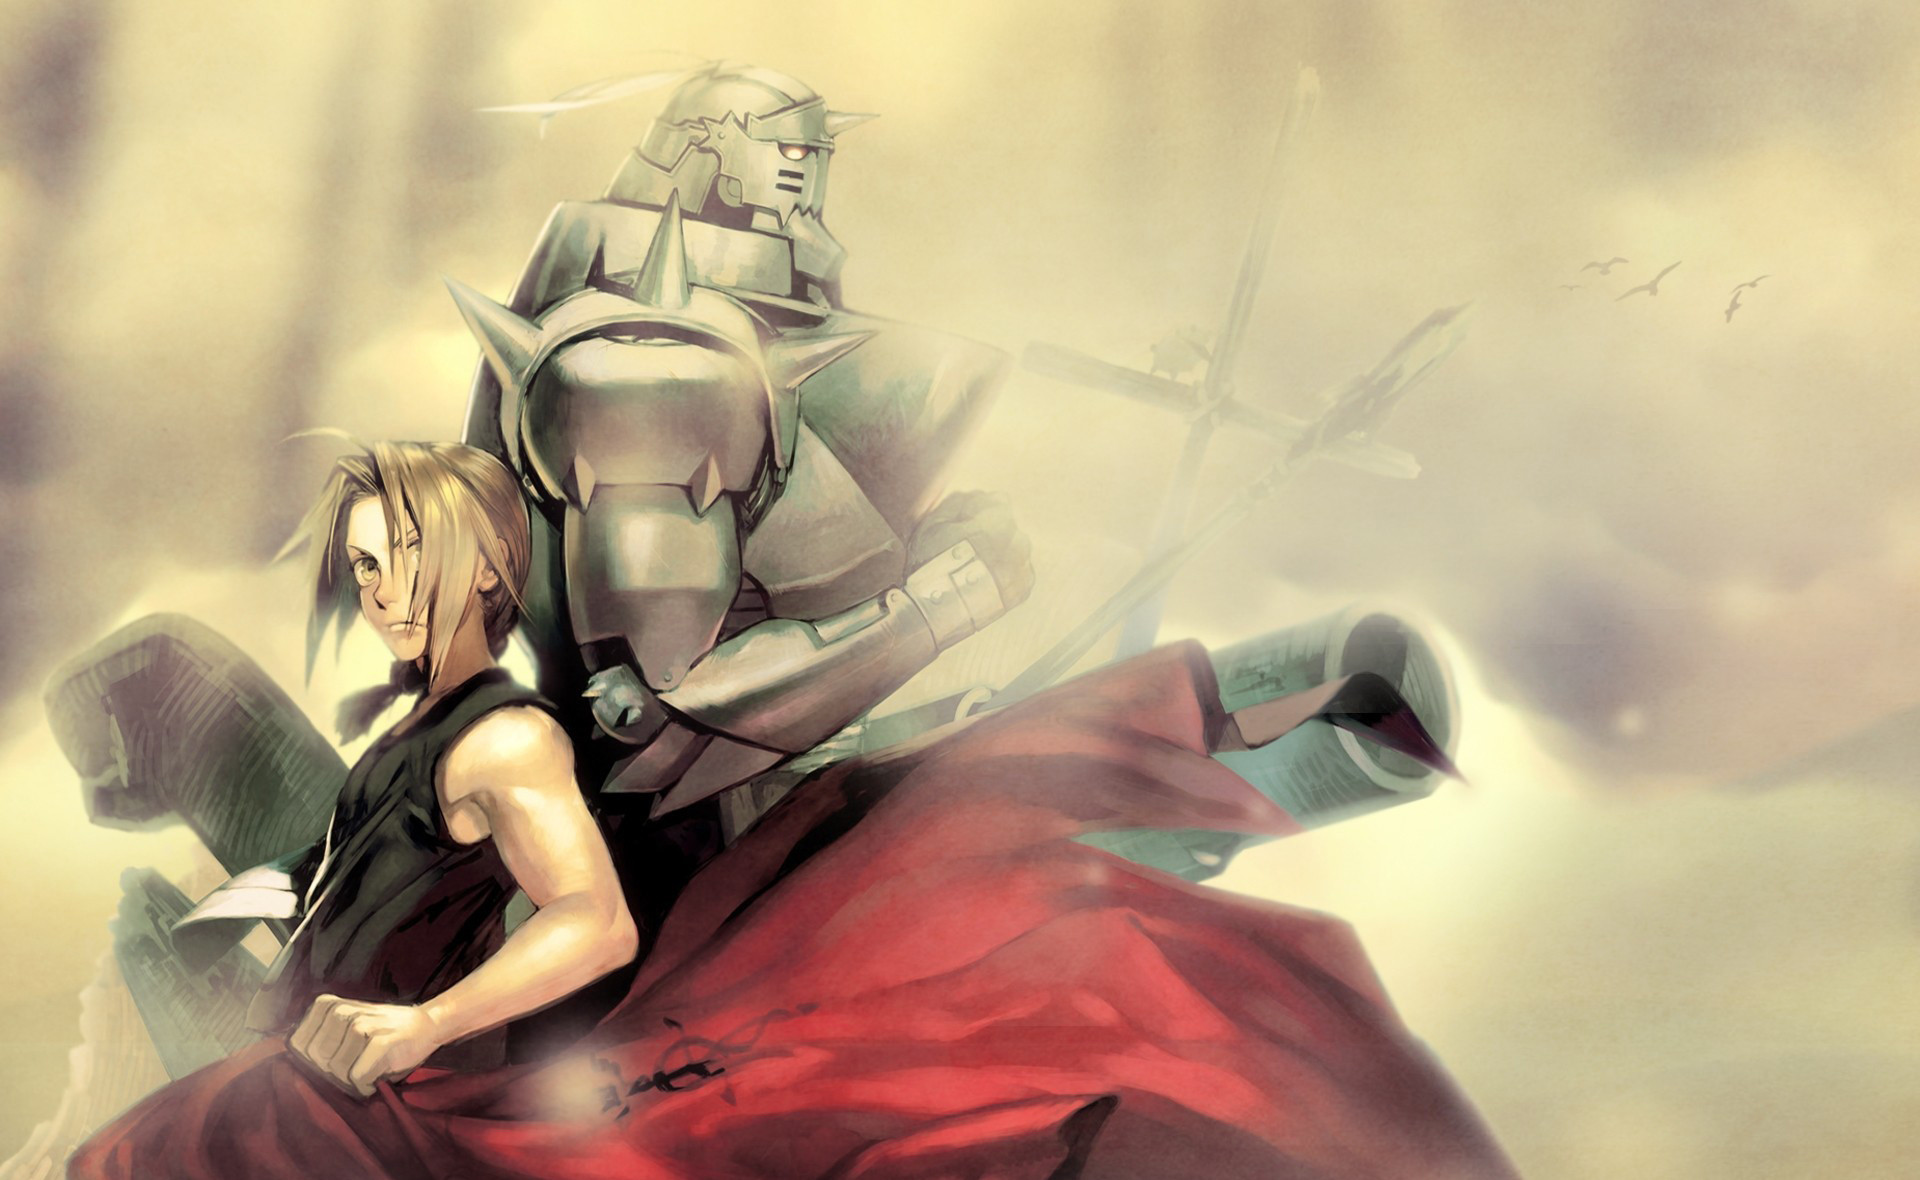 Fullmetal Alchemist Background Image